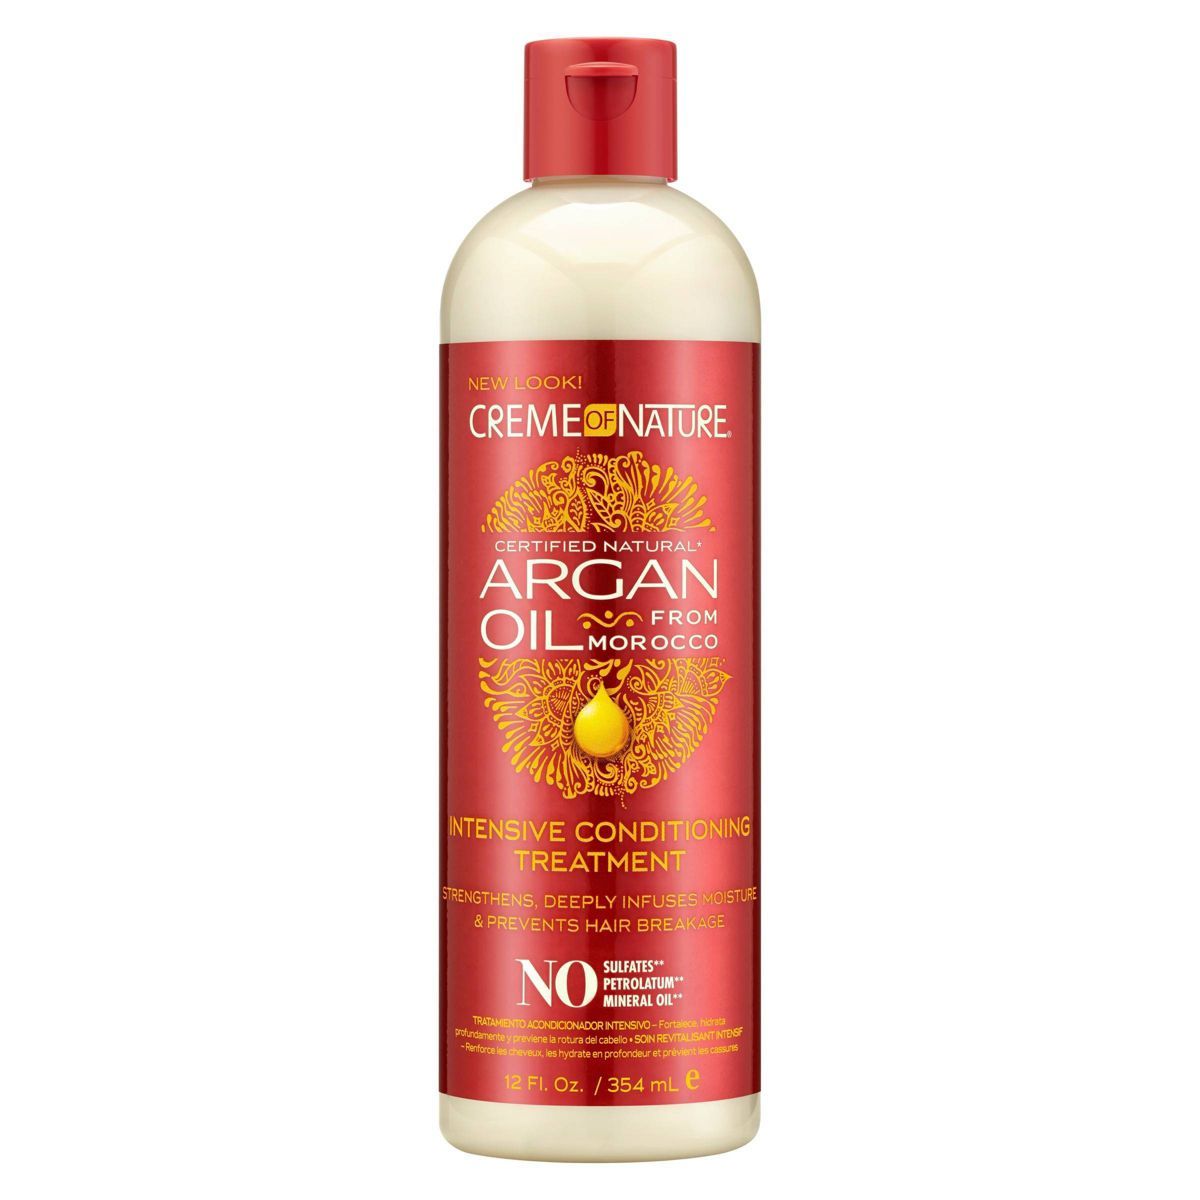 Creme of Nature Argan Oil Intensive Conditioning Treatment - 12 fl oz | Target